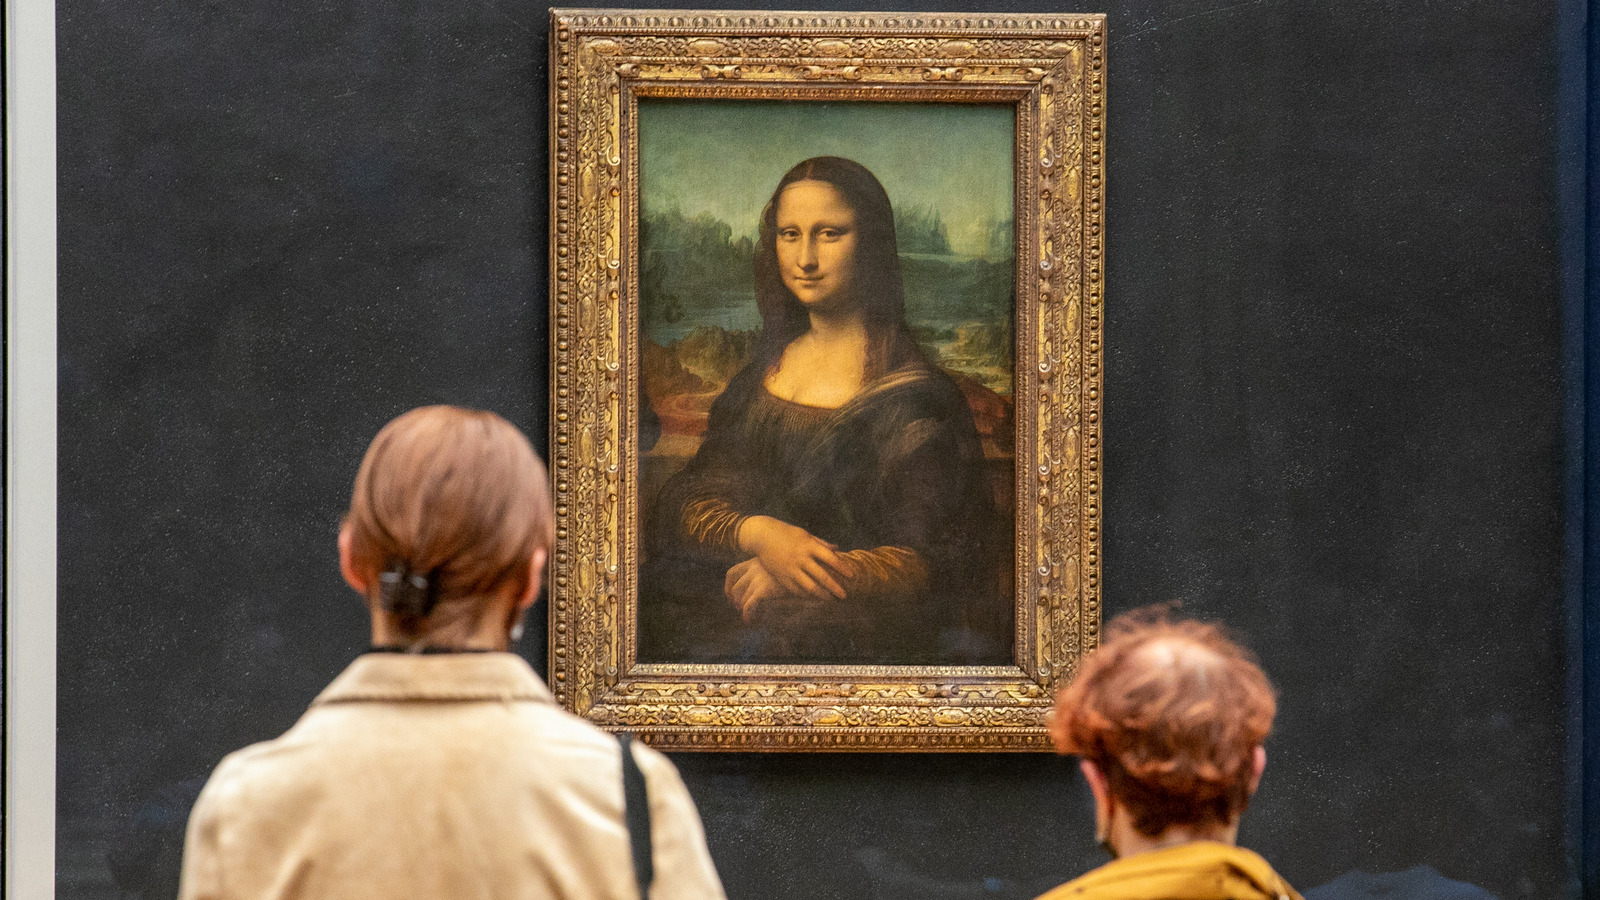 Where Is The Original Mona Lisa?